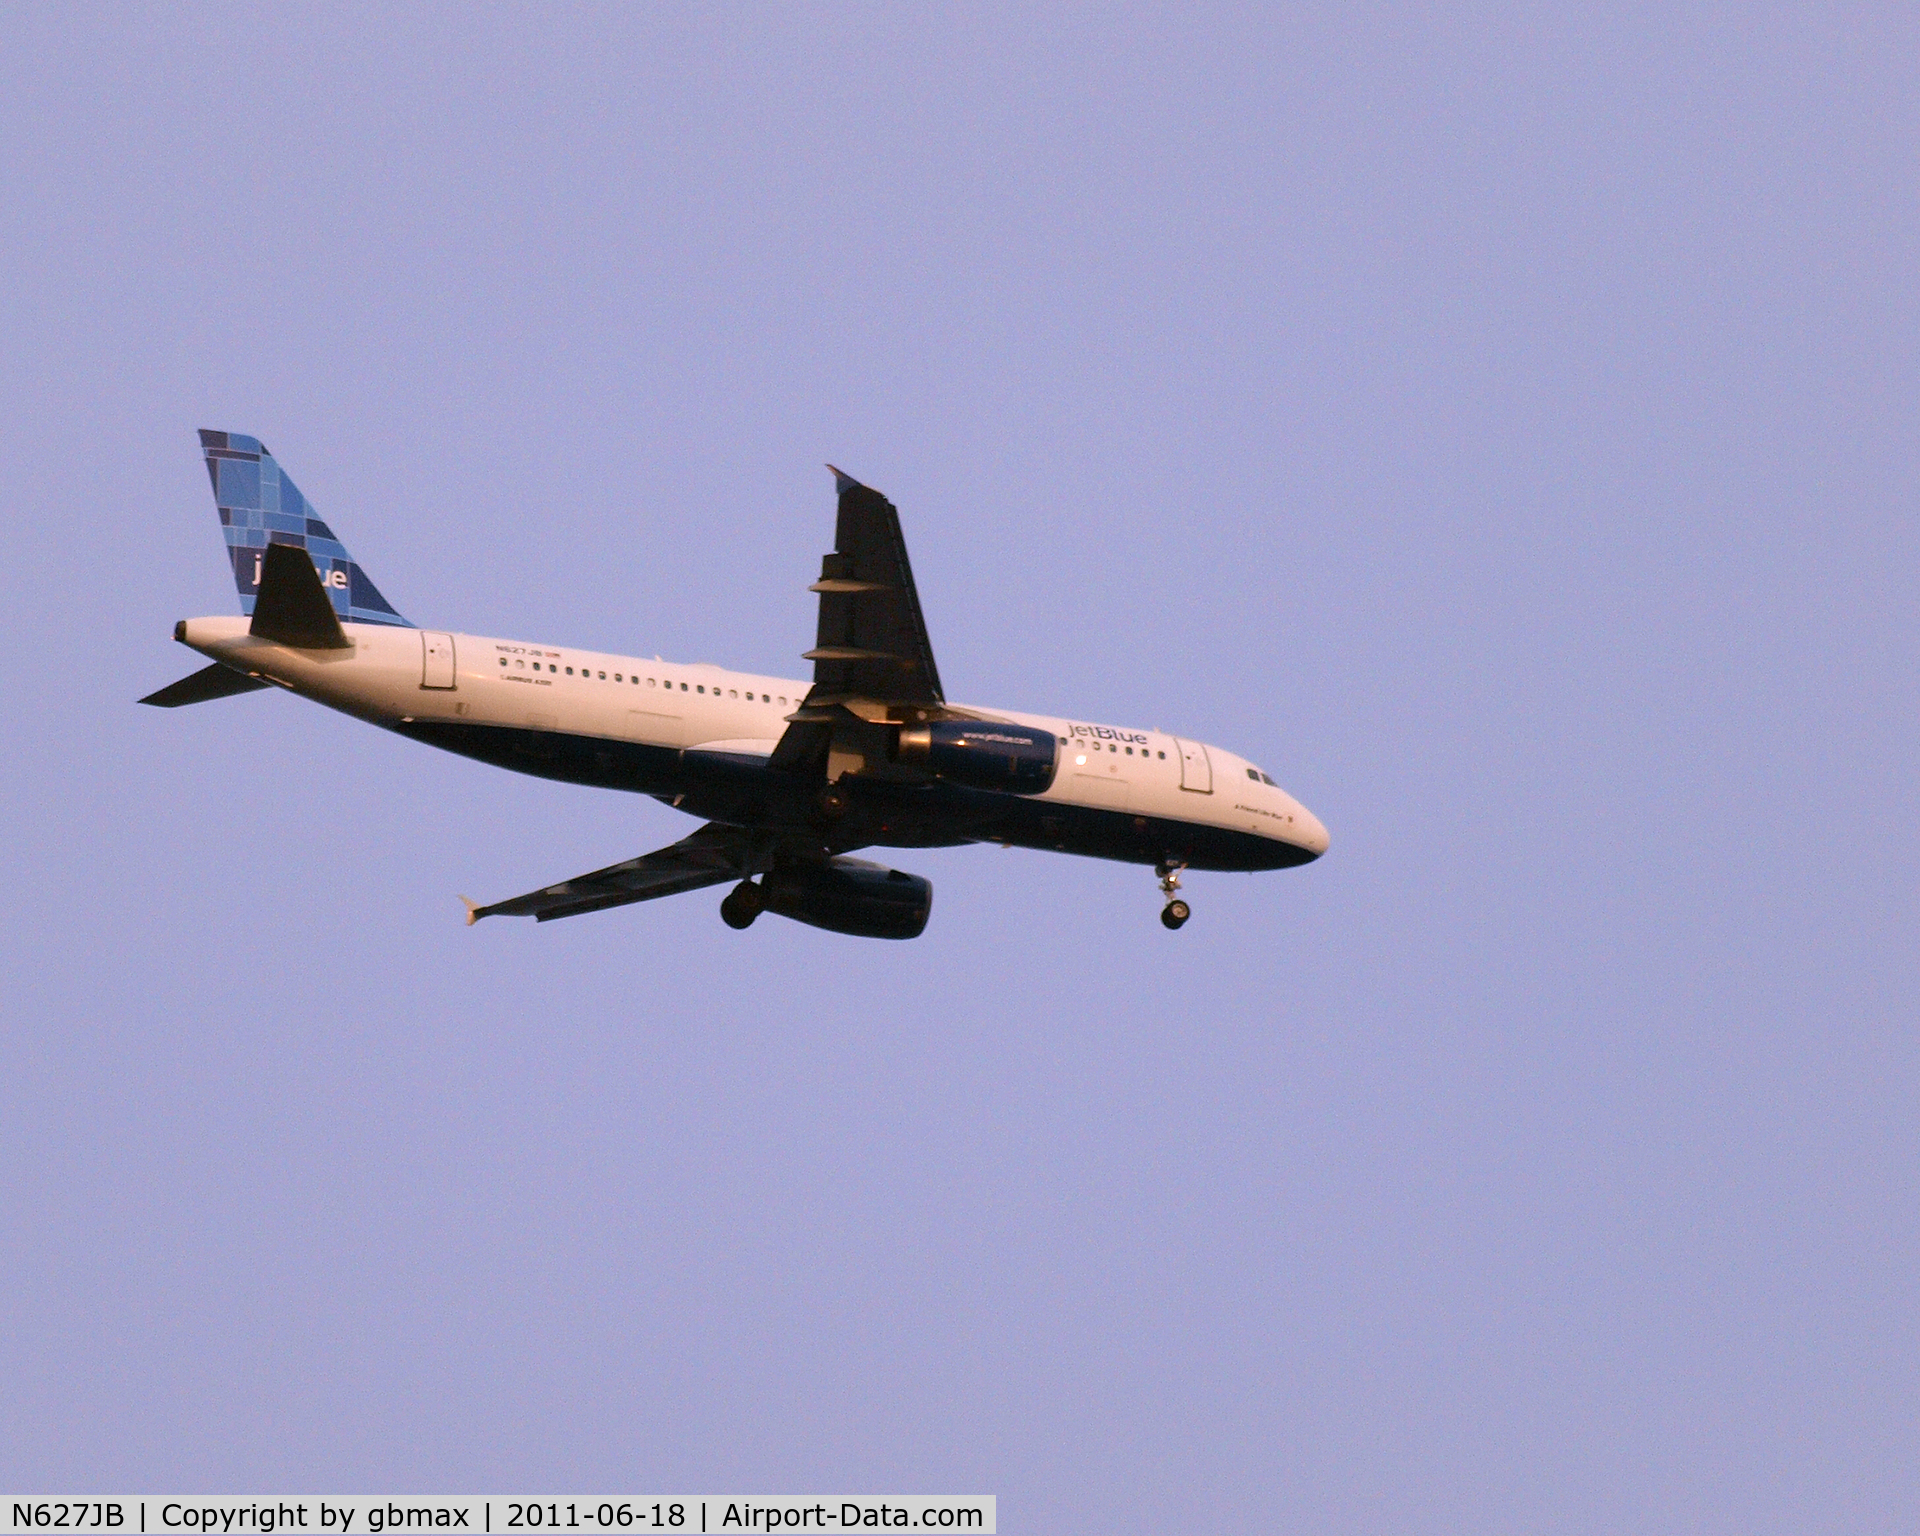 N627JB, 2005 Airbus A320-232 C/N 2577, Going to a landing at JFK